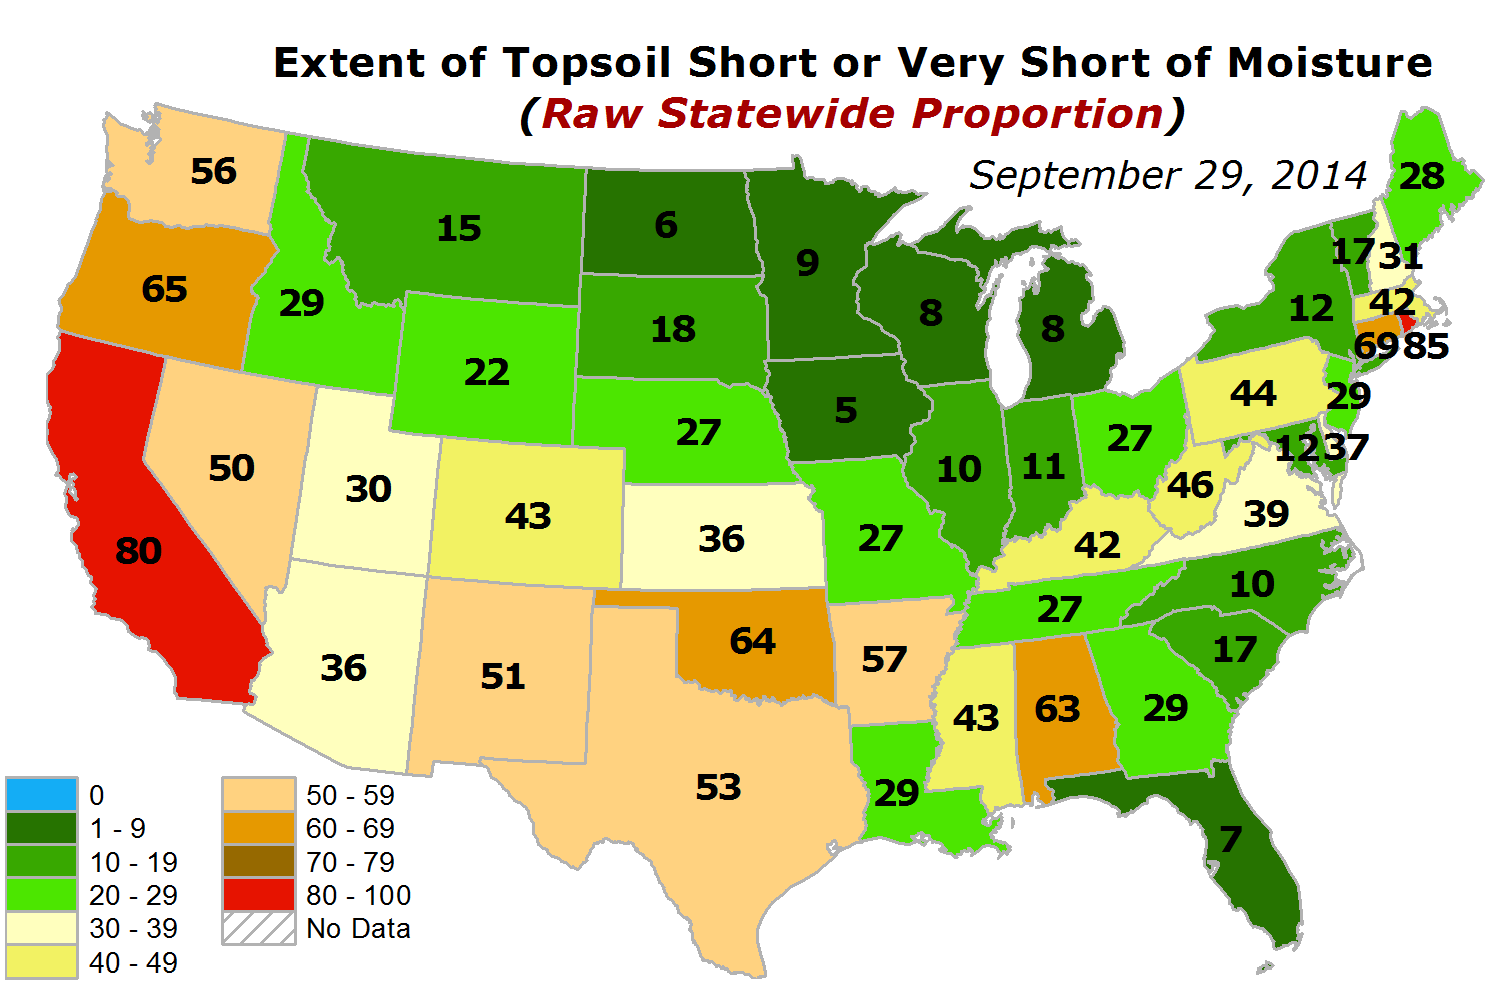 USDA Topsoil Moisture Short-Very Short map